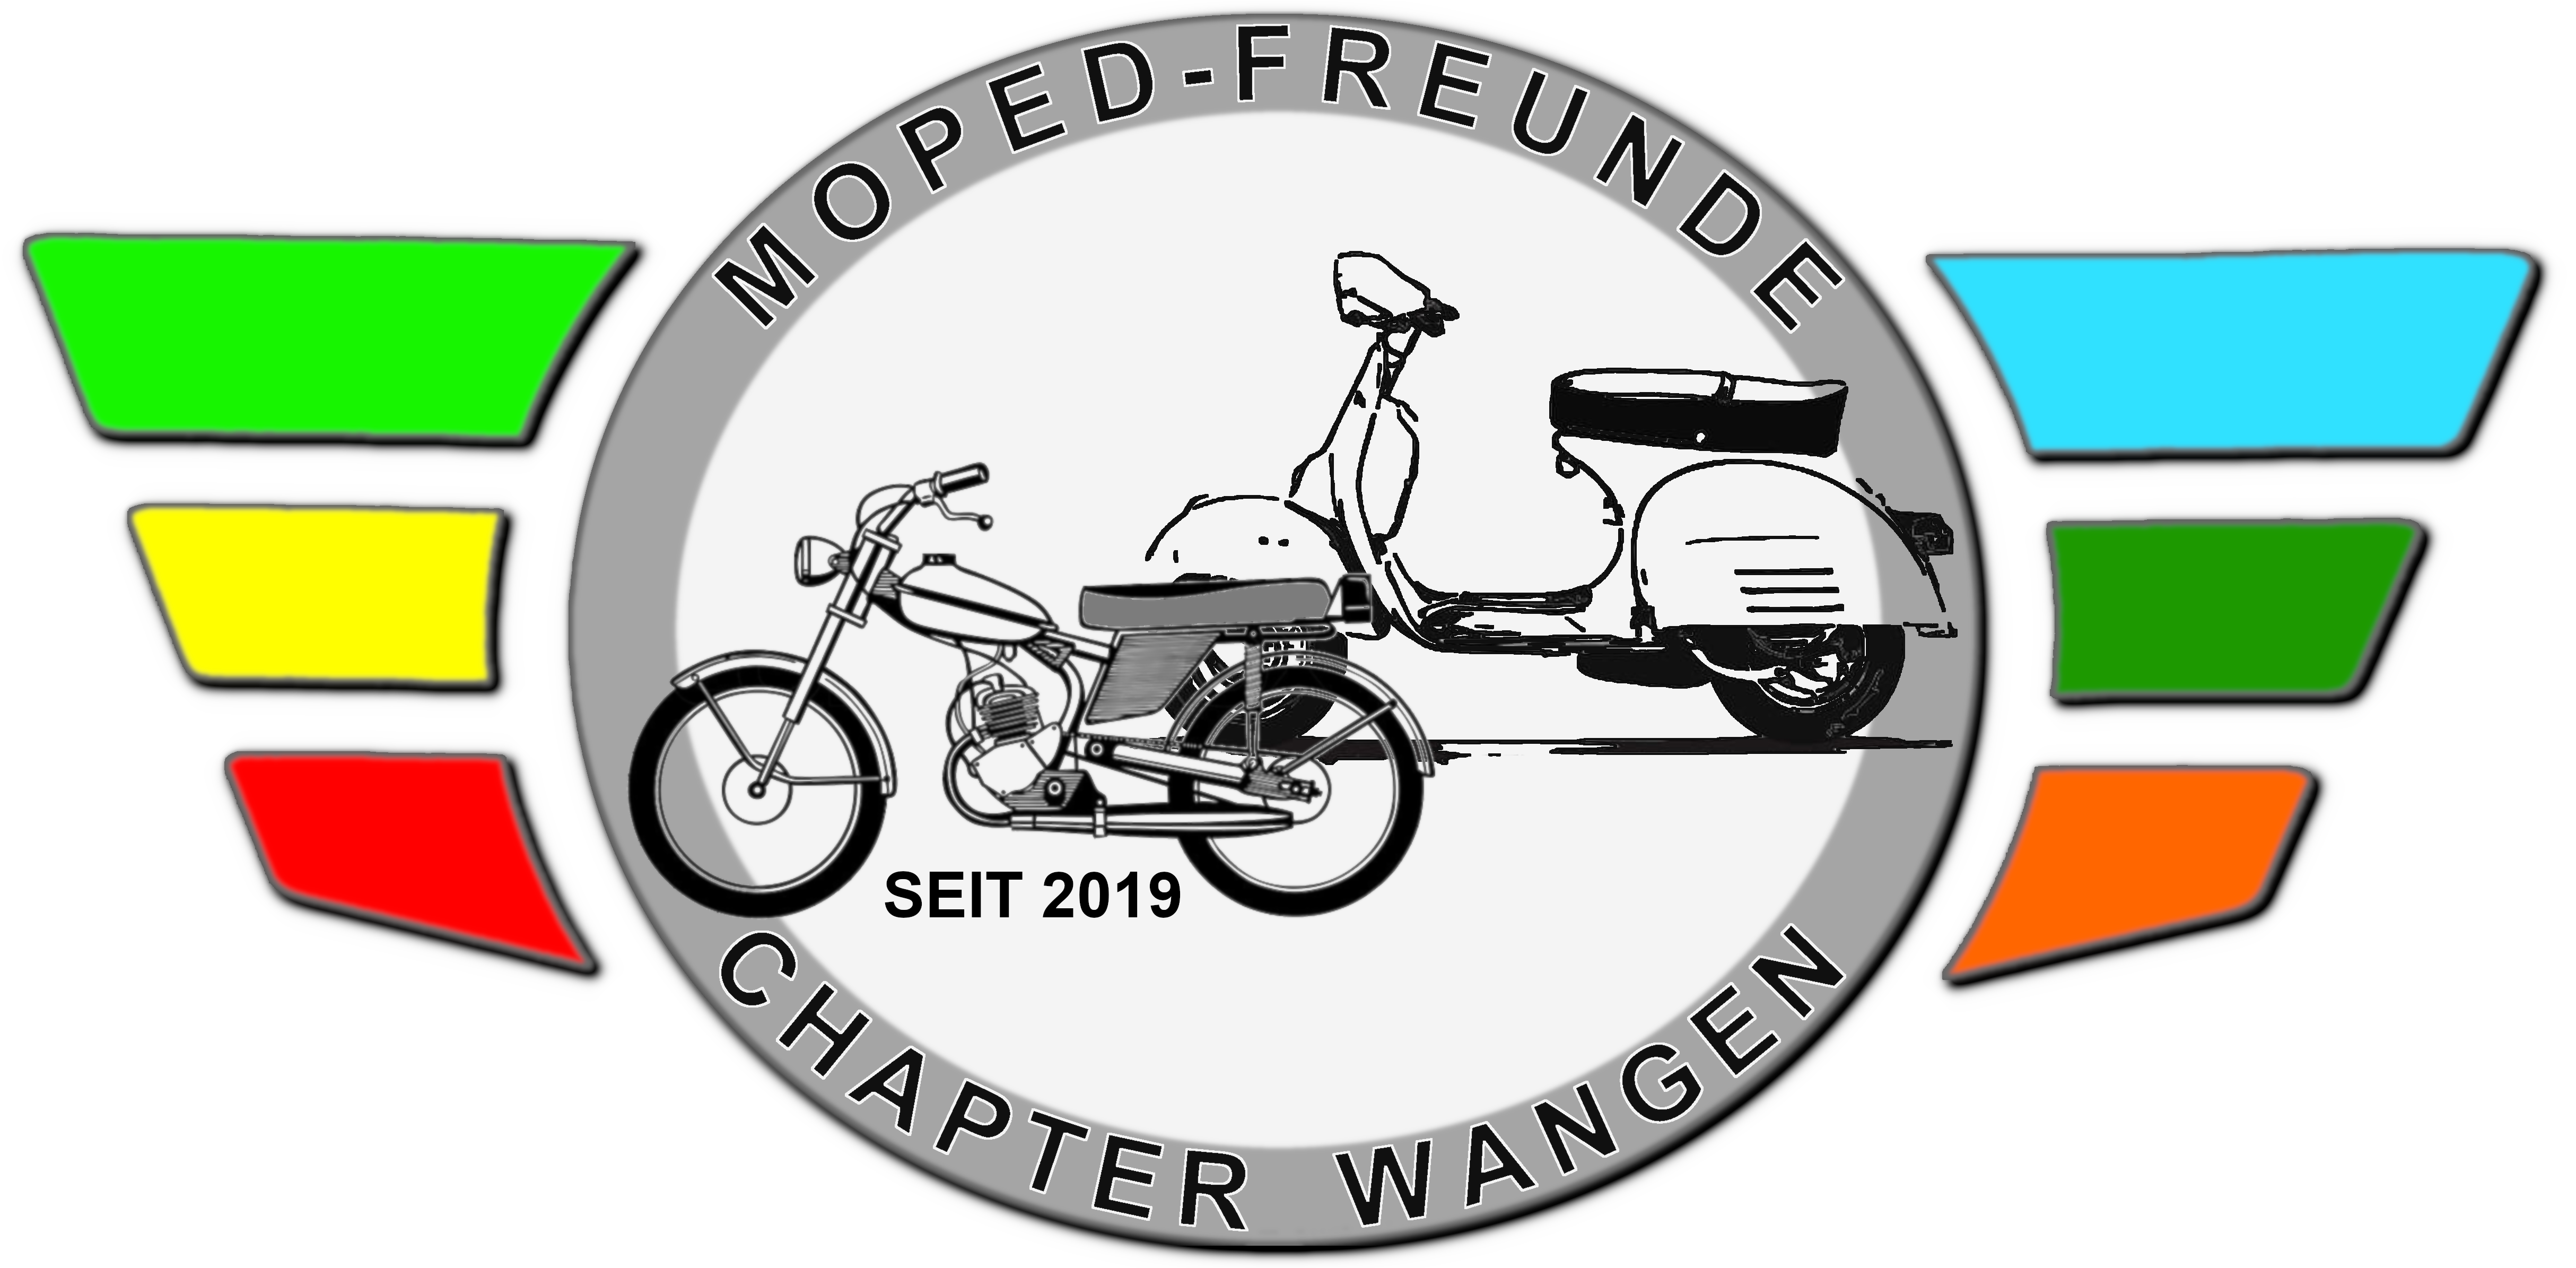 Moped-Freunde